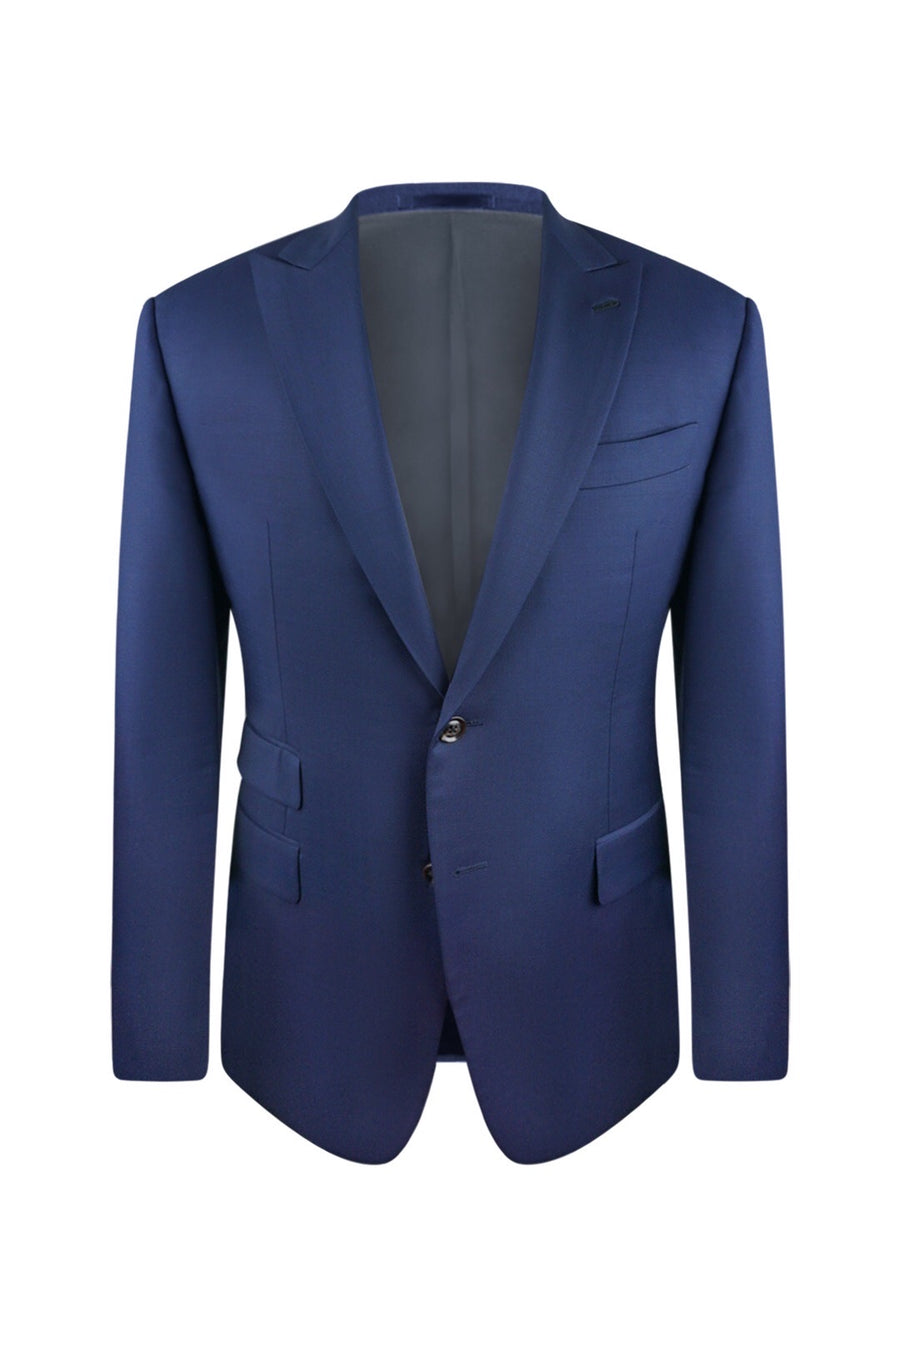 Dark blue suit jacket